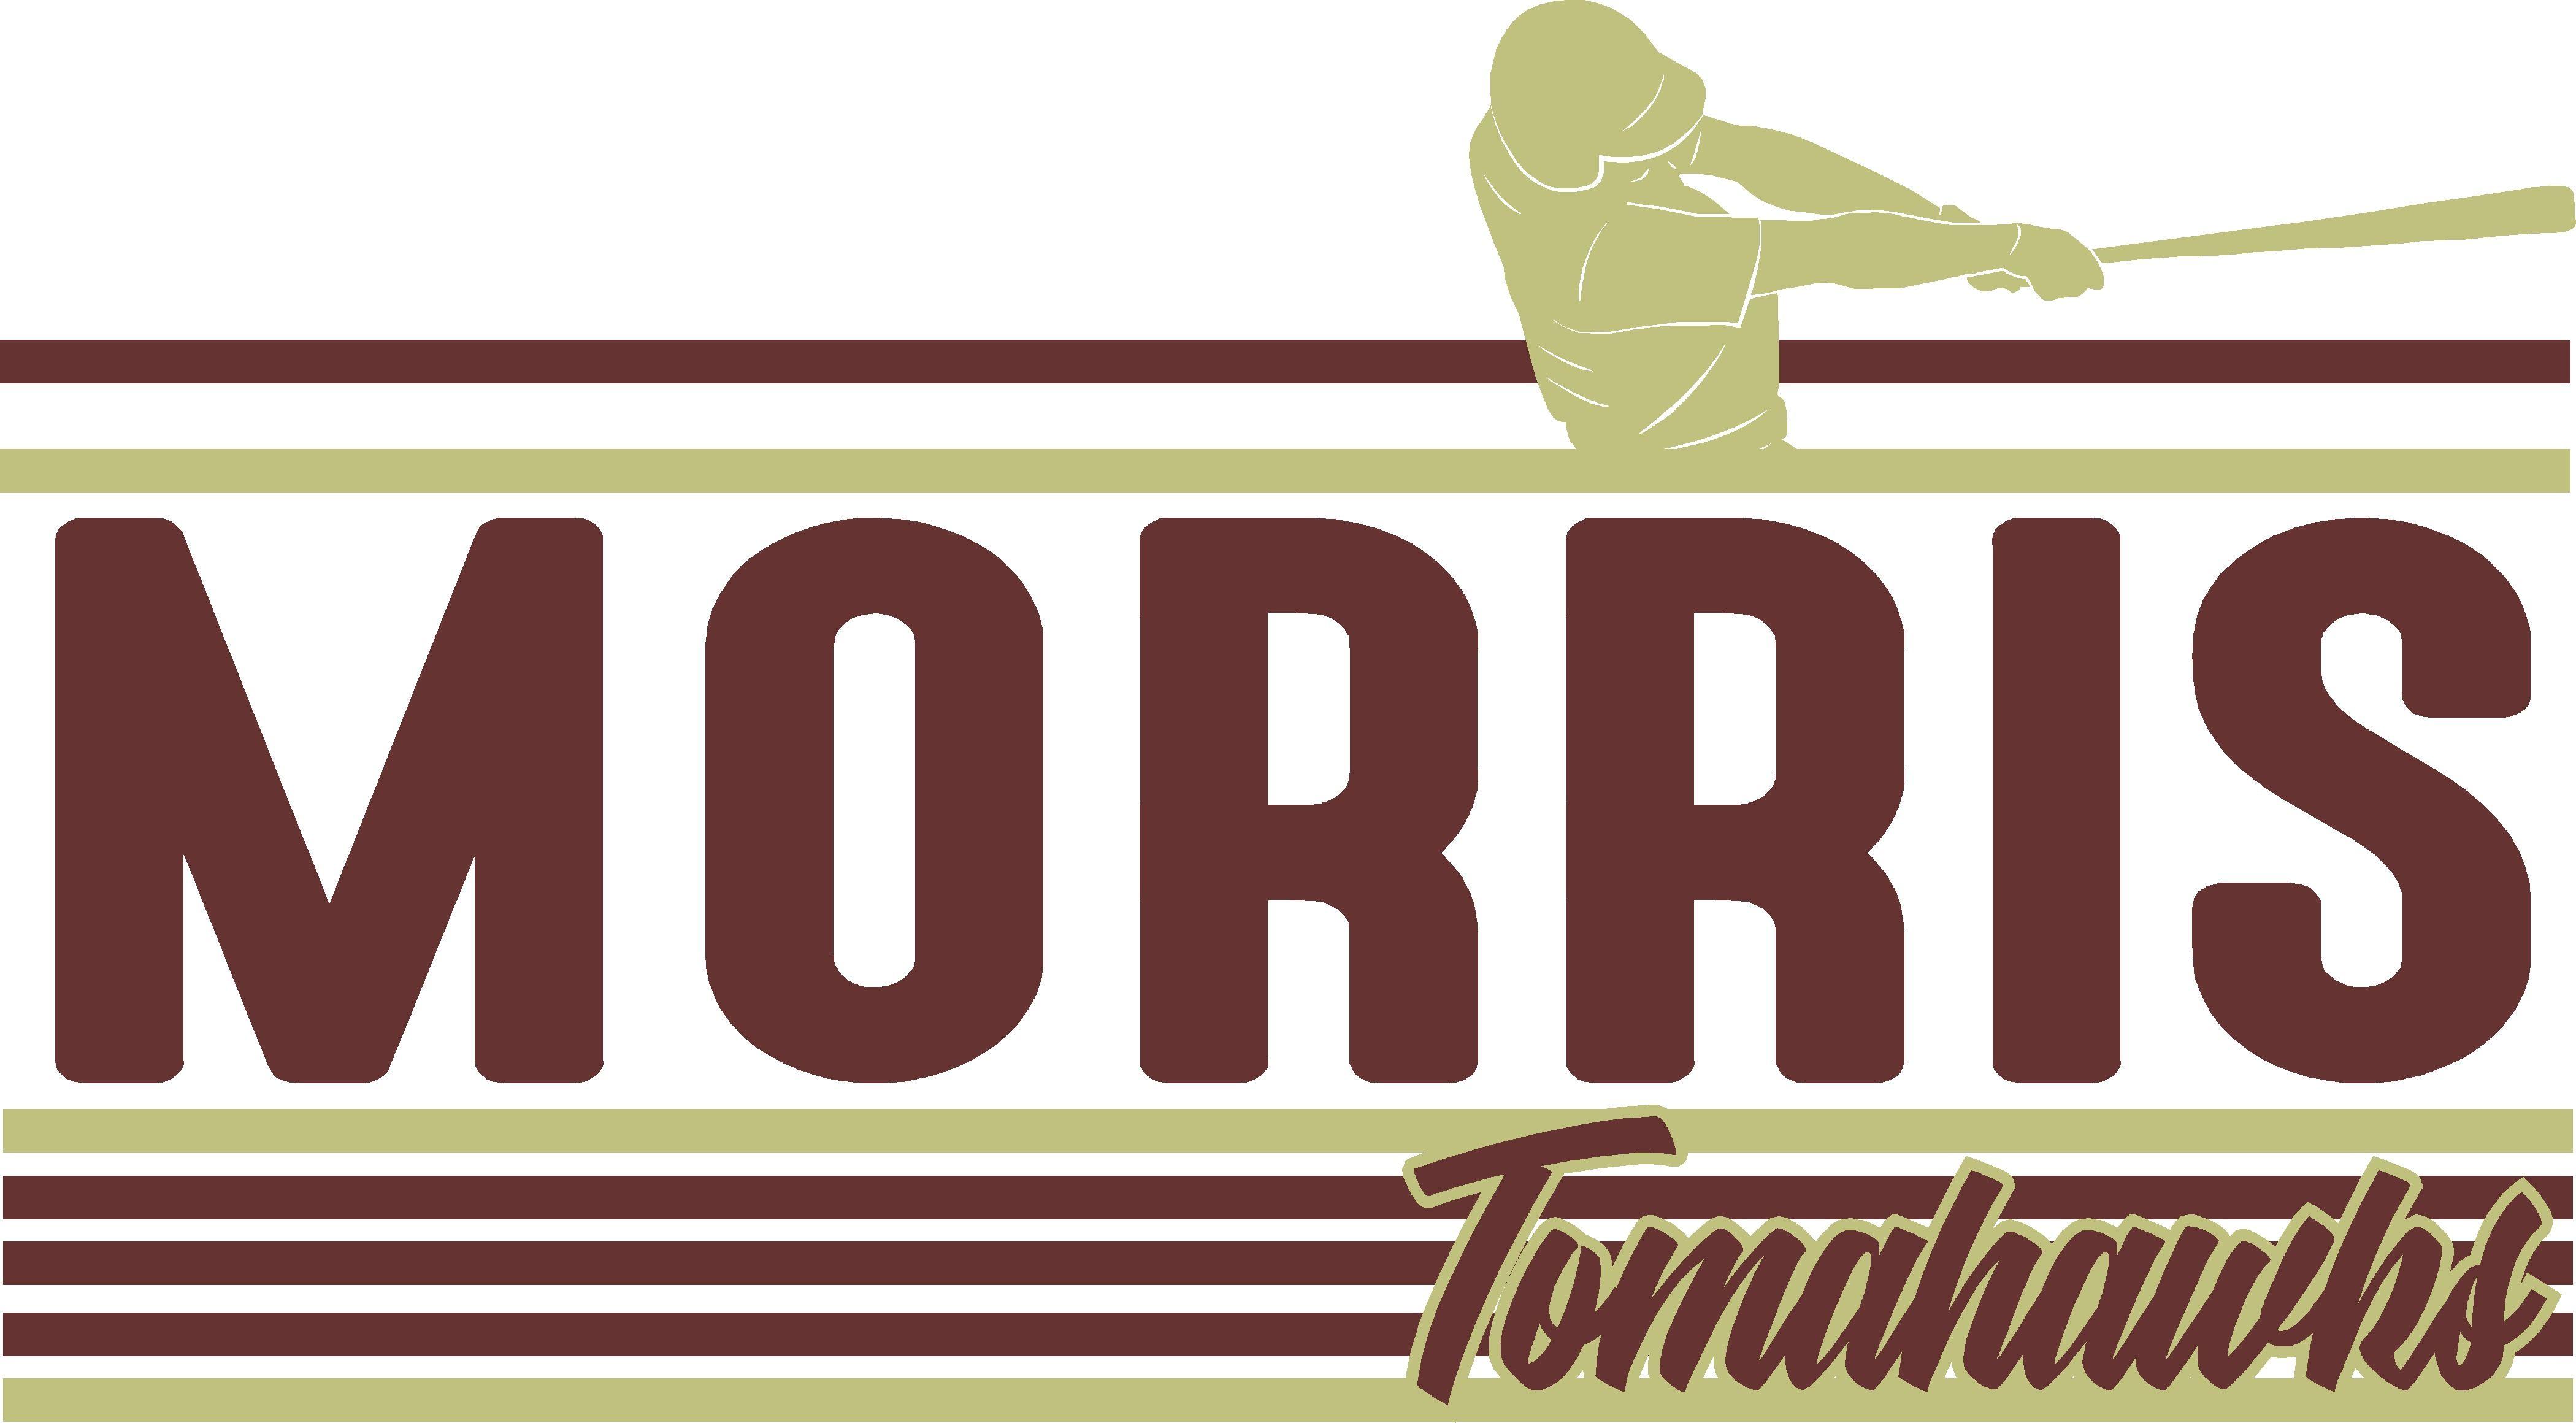 Tomahawks Logo - Tomahawks Men's Crossover Hoodie